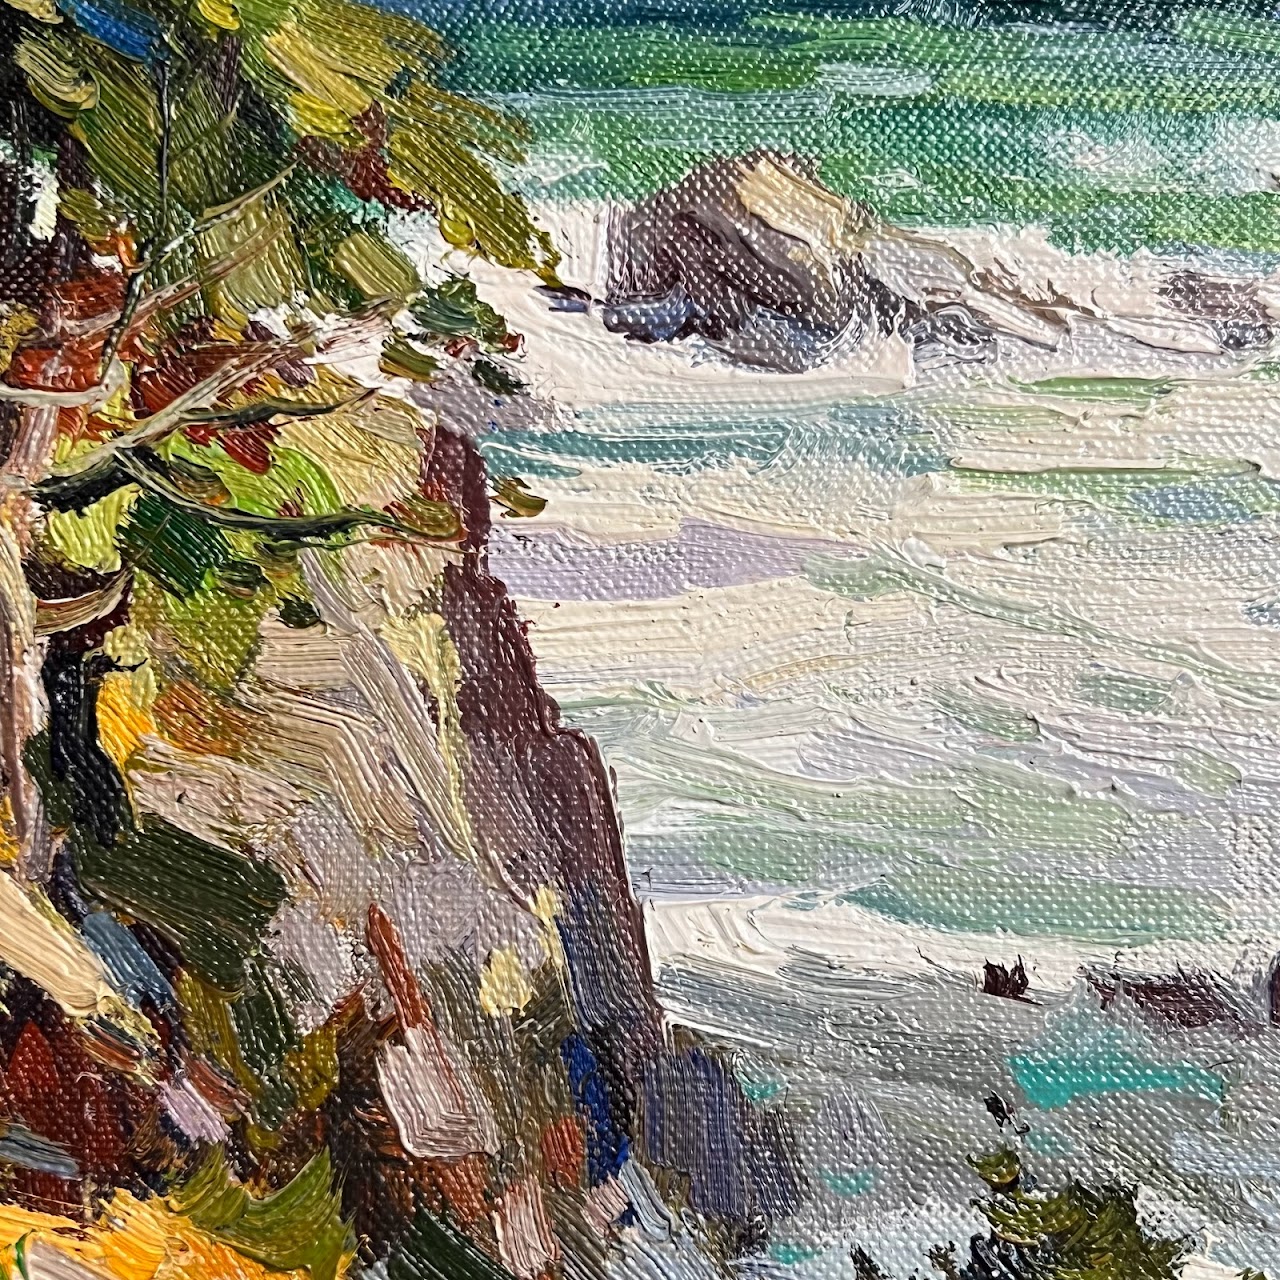 Edward Norton Ward 'Point Lobos Seas' Signed Oil Painting